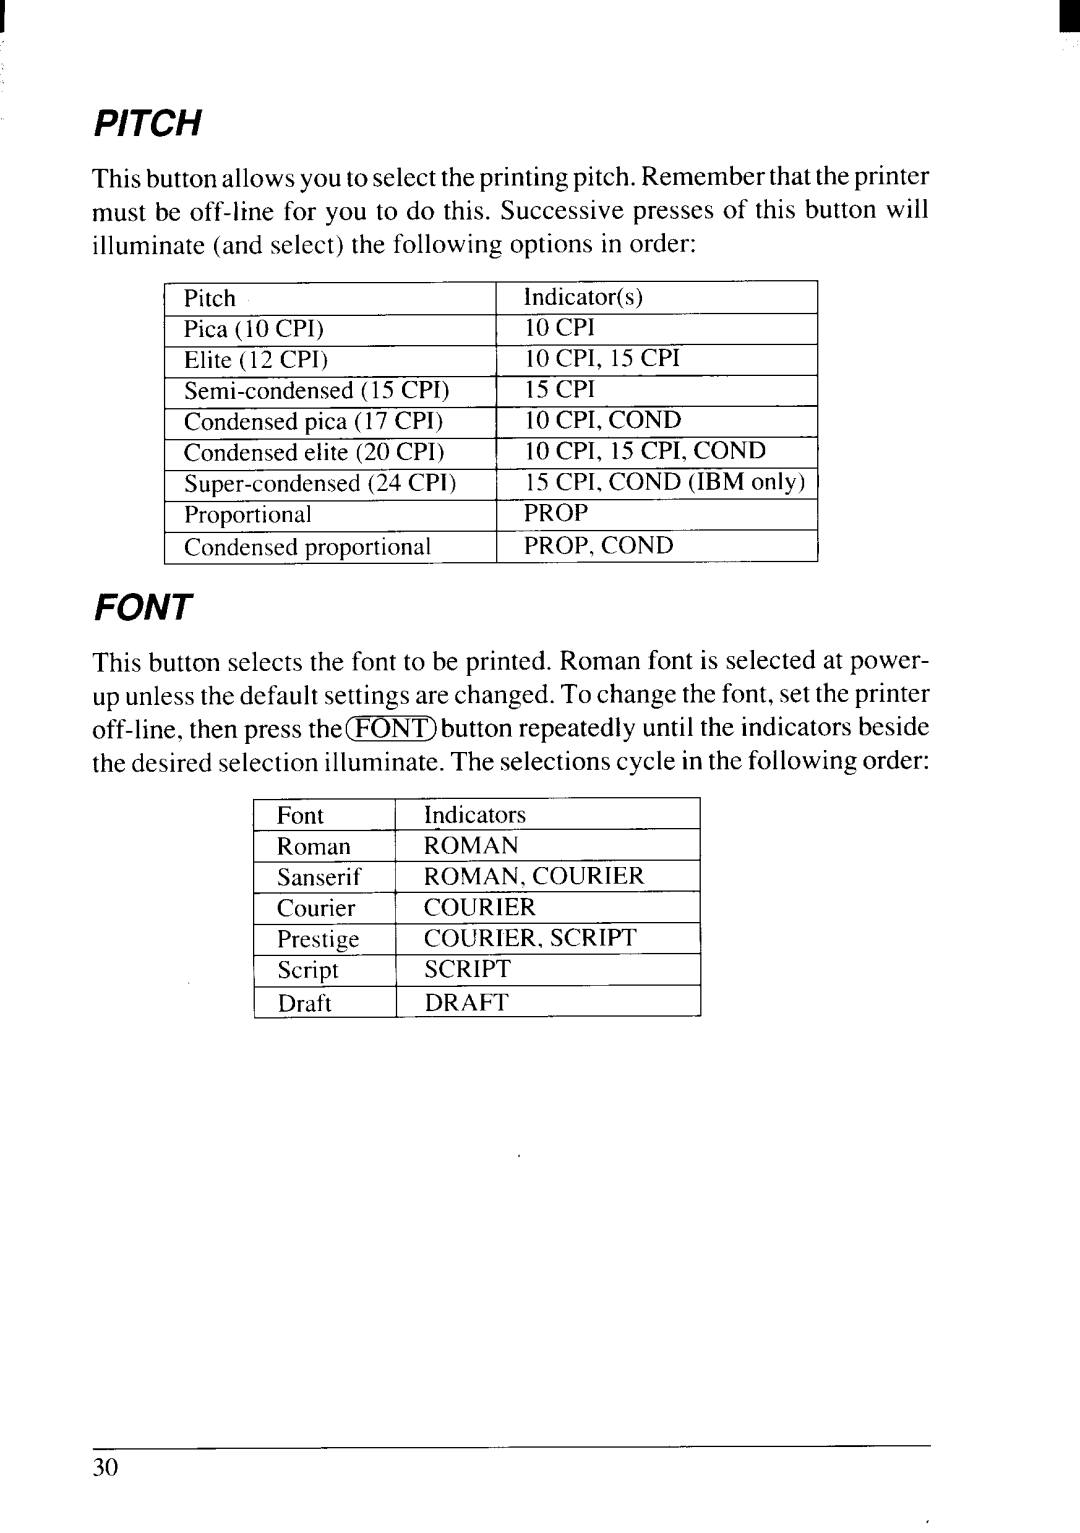 Star Micronics NX-2415II user manual Pitch, Font 